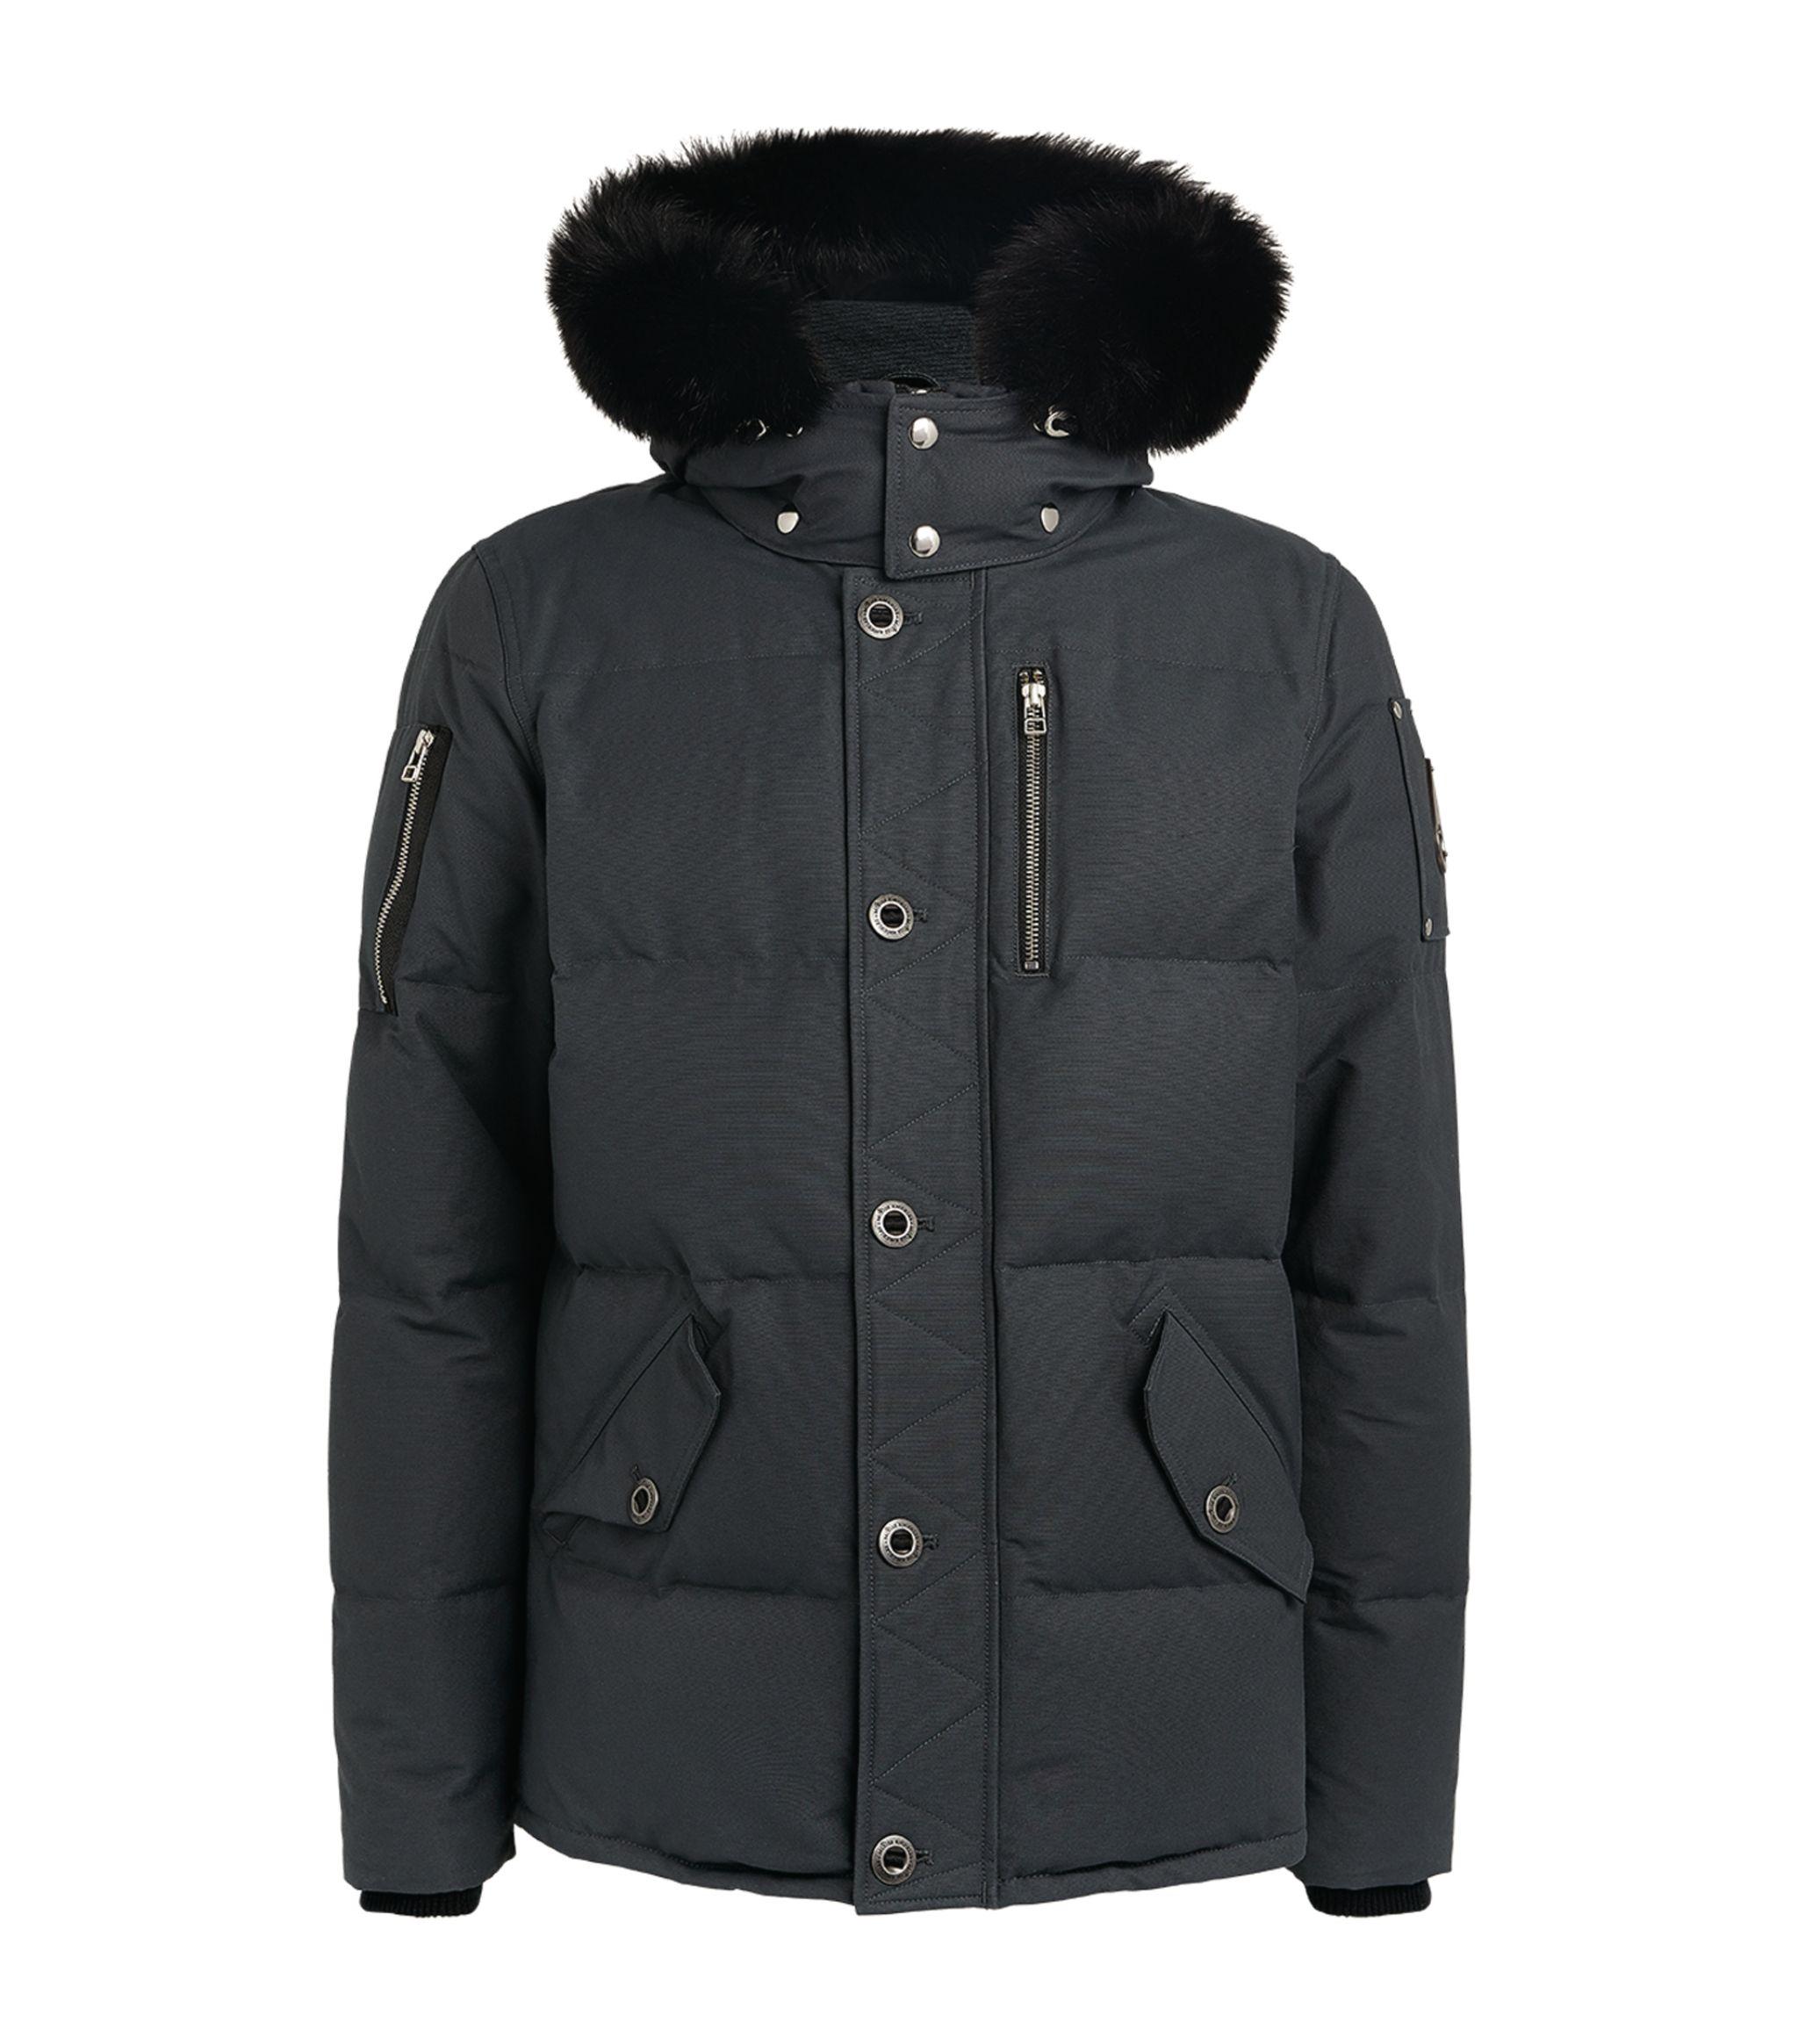 Moose Knuckles Cotton 3q Hooded Jacket in Black for Men - Lyst